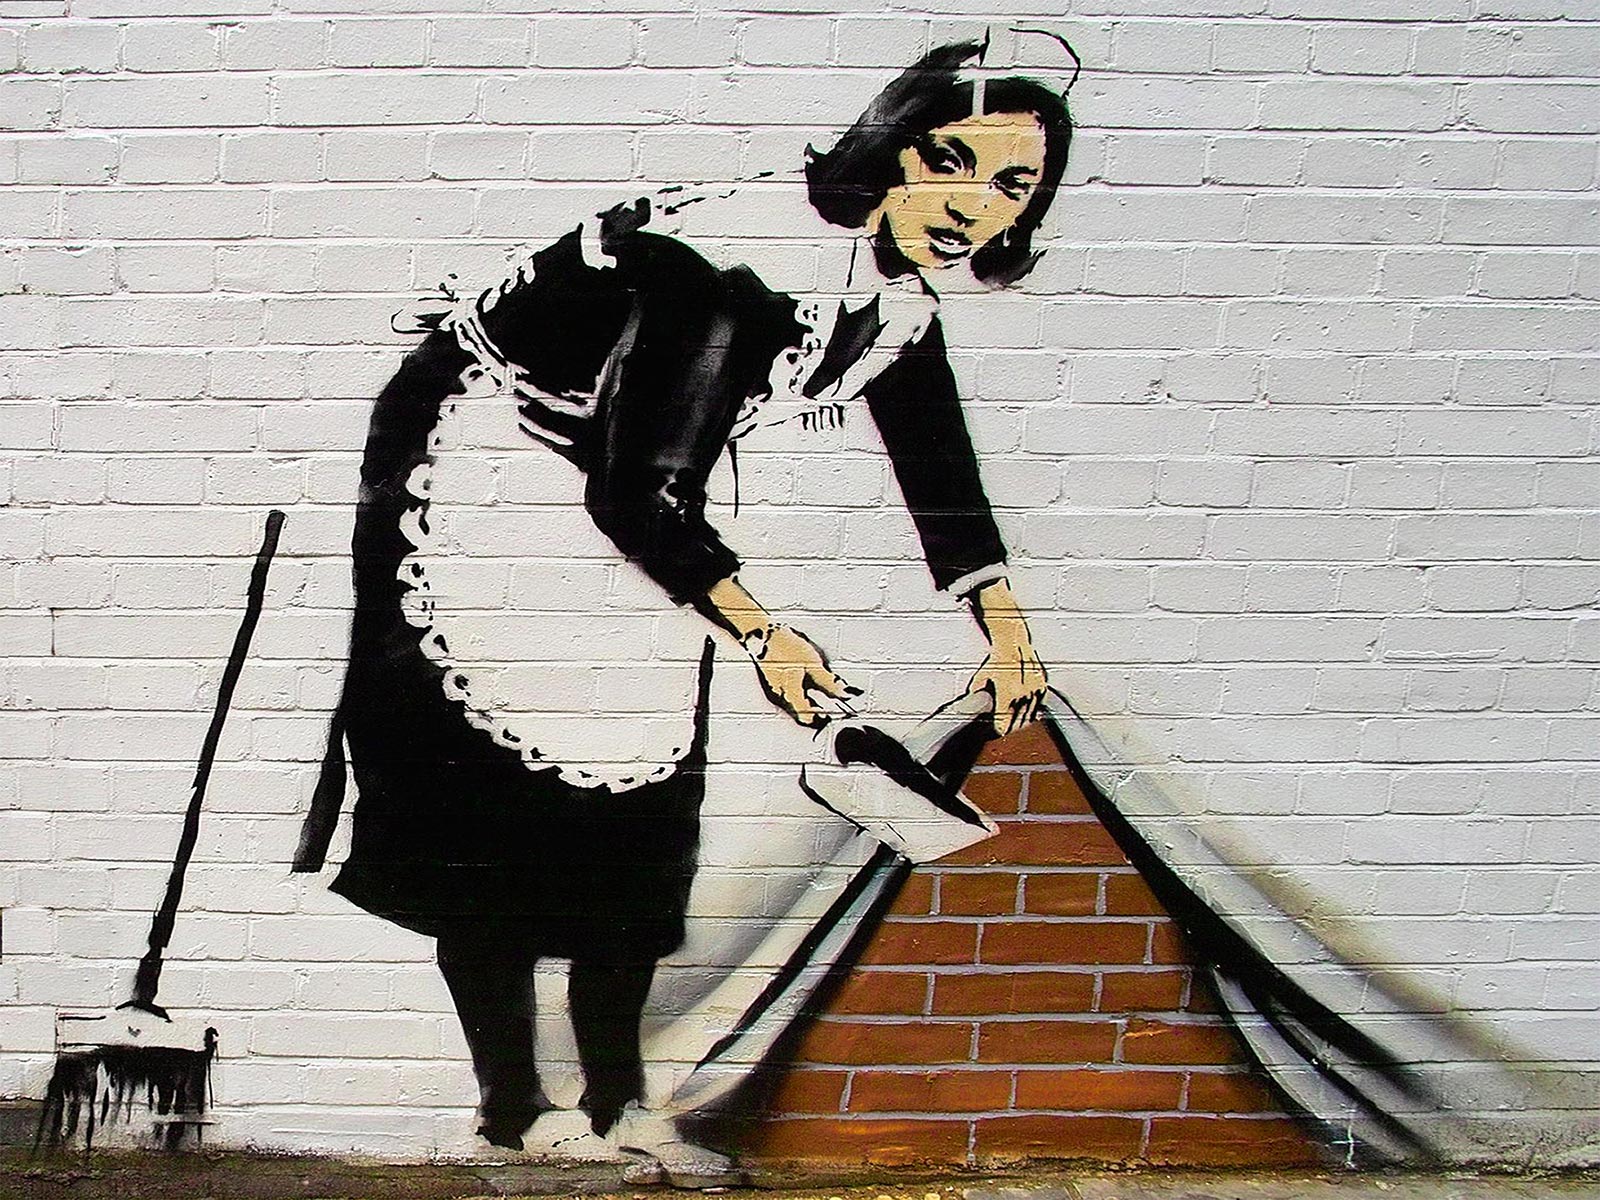 Sweeper Banksy Wallpaper Jpg